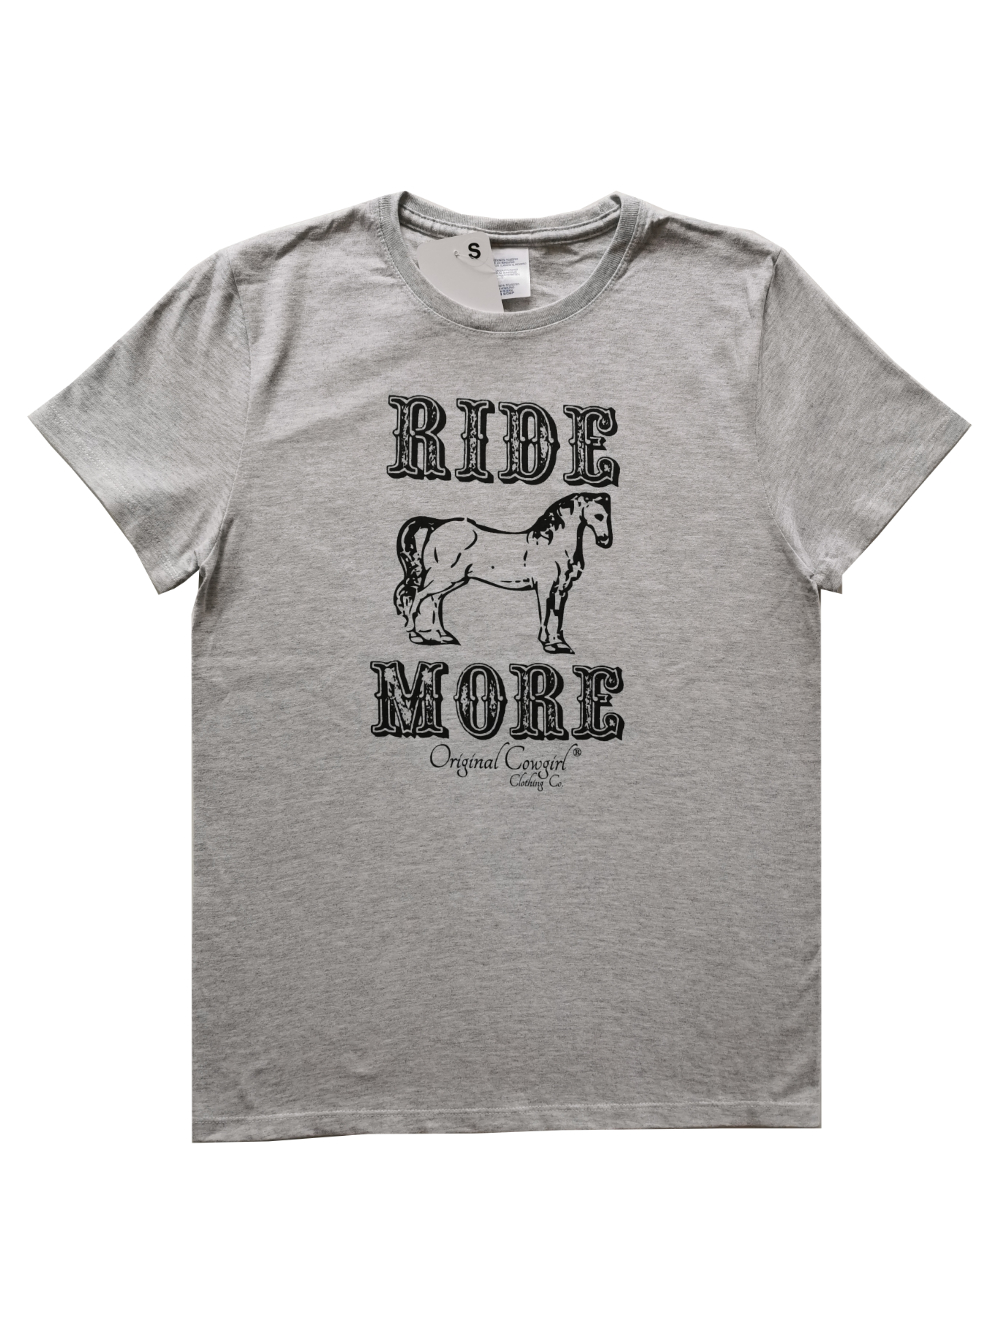 Damen T-Shirt "Ride more", grau